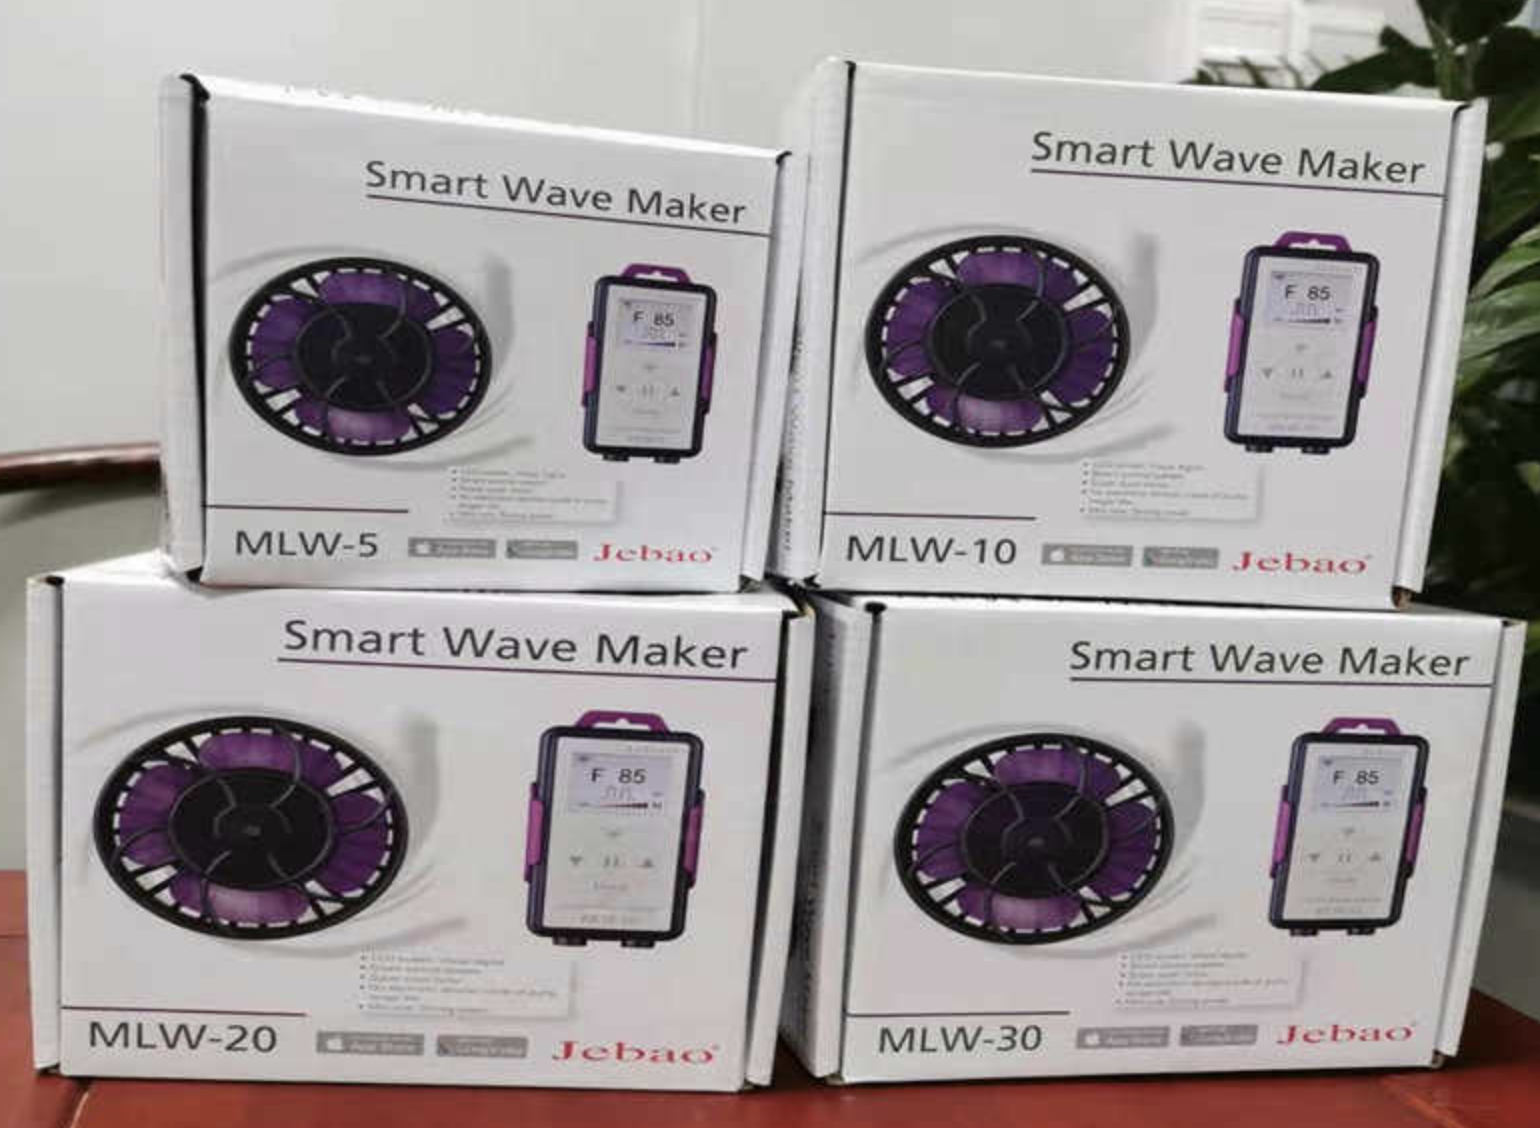 Jecod/Jebao MLW-10 Wi-Fi stromingspompen (sine wave)